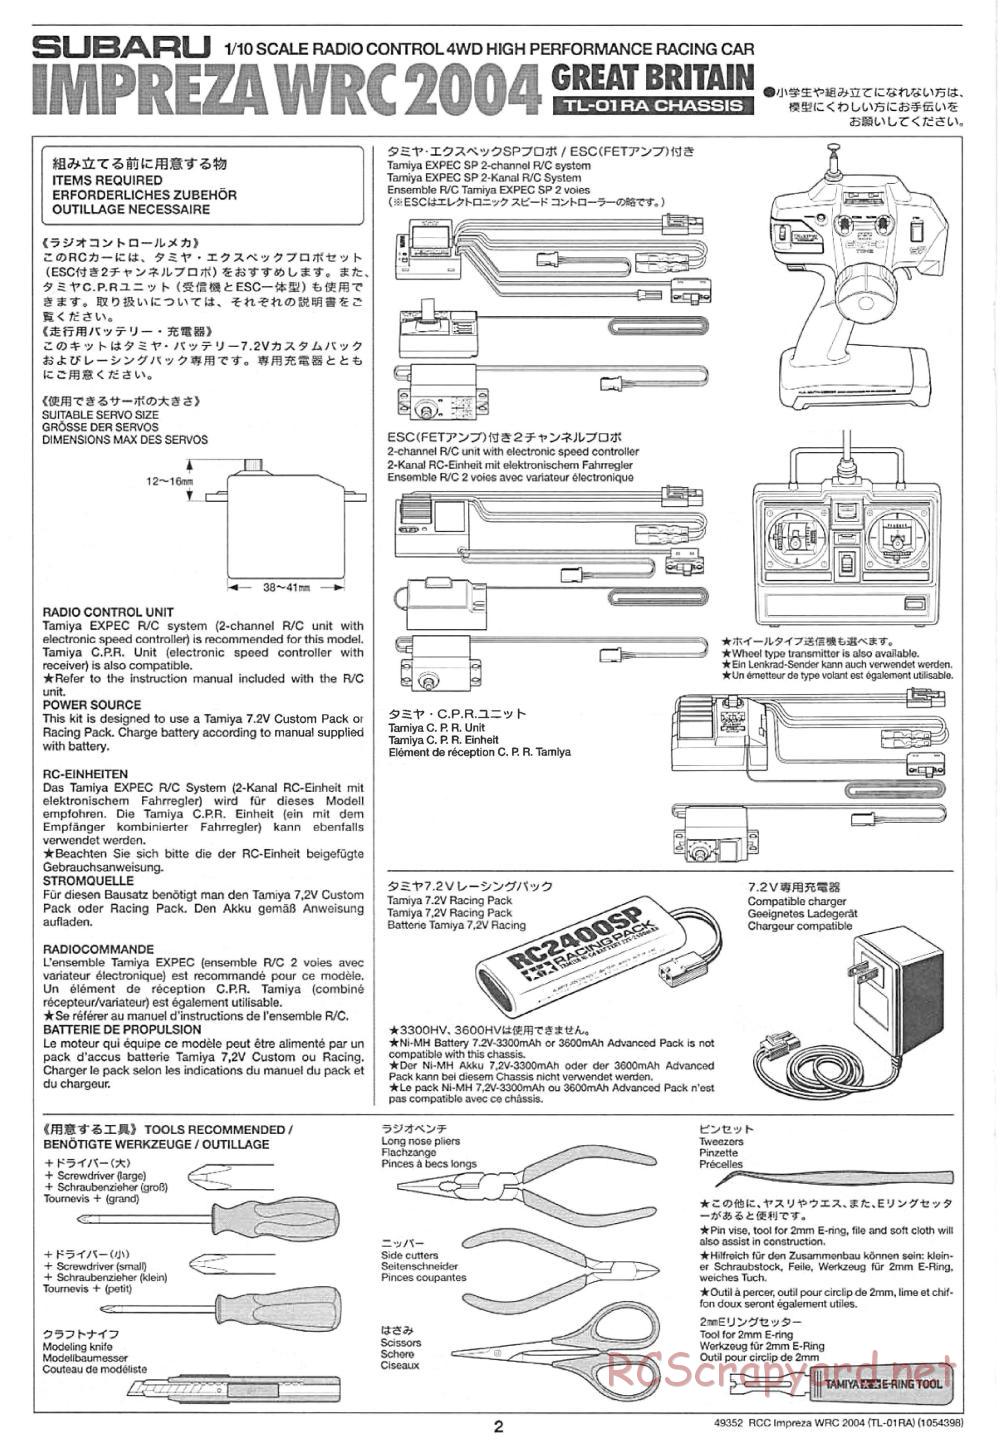 Tamiya - Subaru Impreza WRC 2004 Chassis - Manual - Page 2